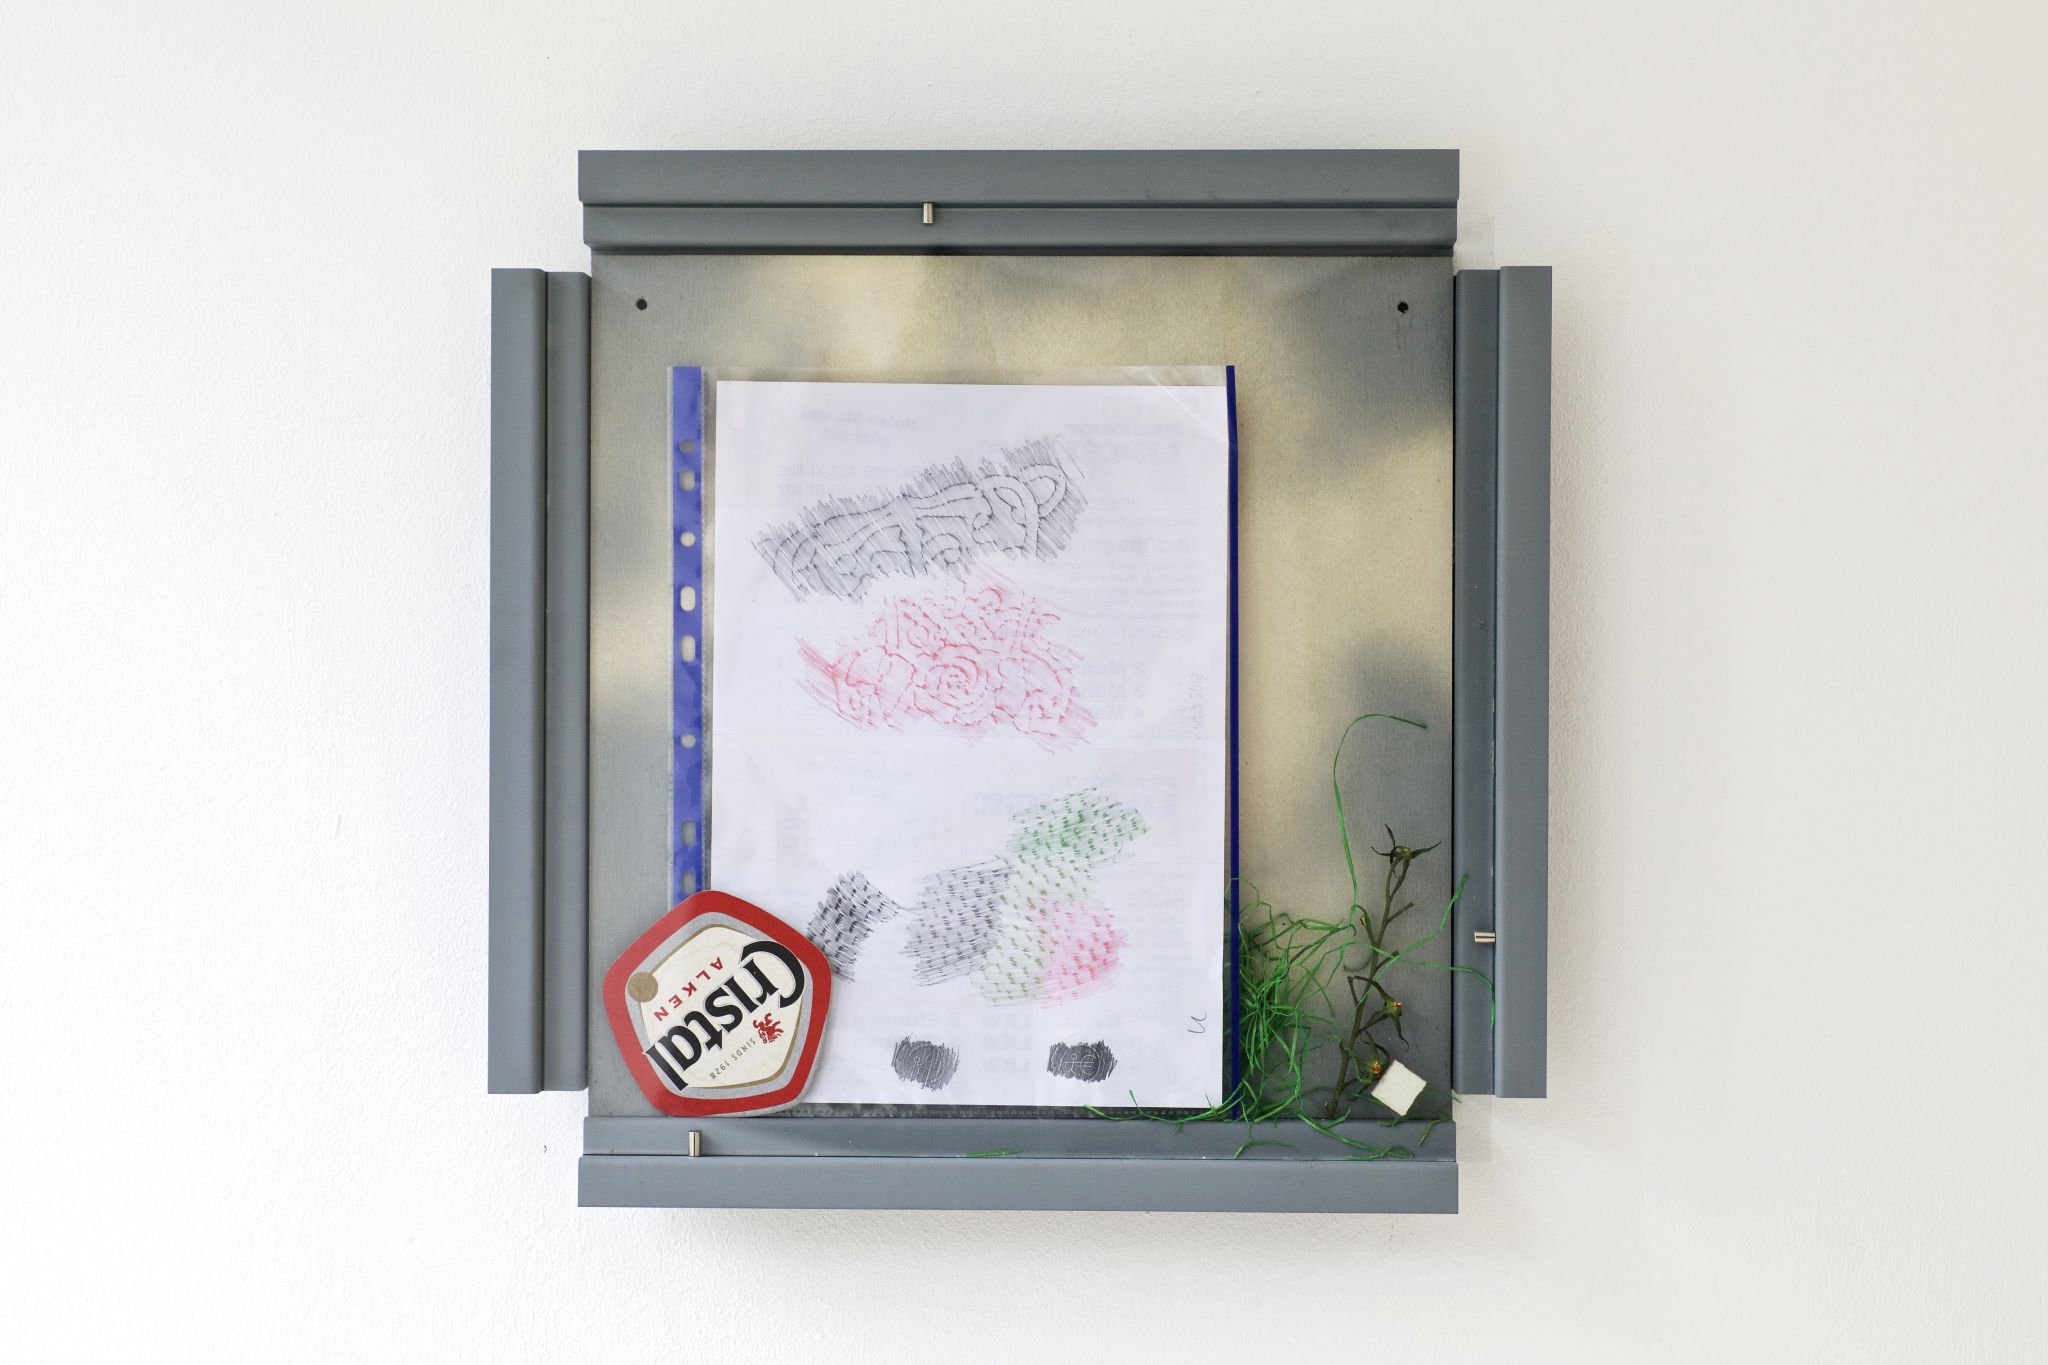 Manfred Pernice, cassette club2, 2015, Magnet, glass, metal, plastic wrap, paper, text, 42 ⁠× ⁠42 ⁠⁠cm